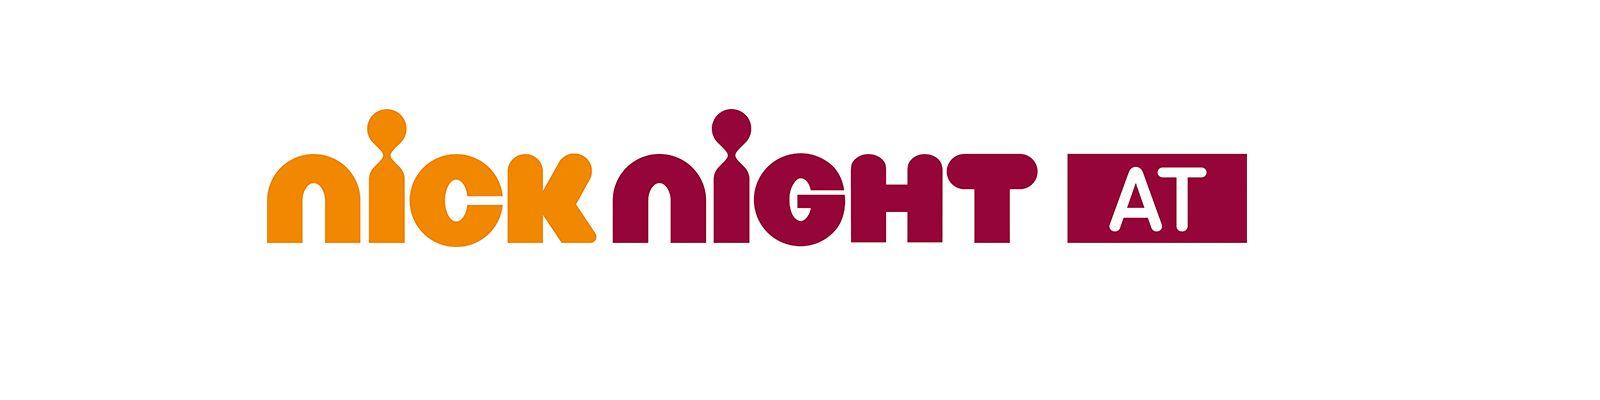 Nick Night Logo - Nicknight Austria Stationen